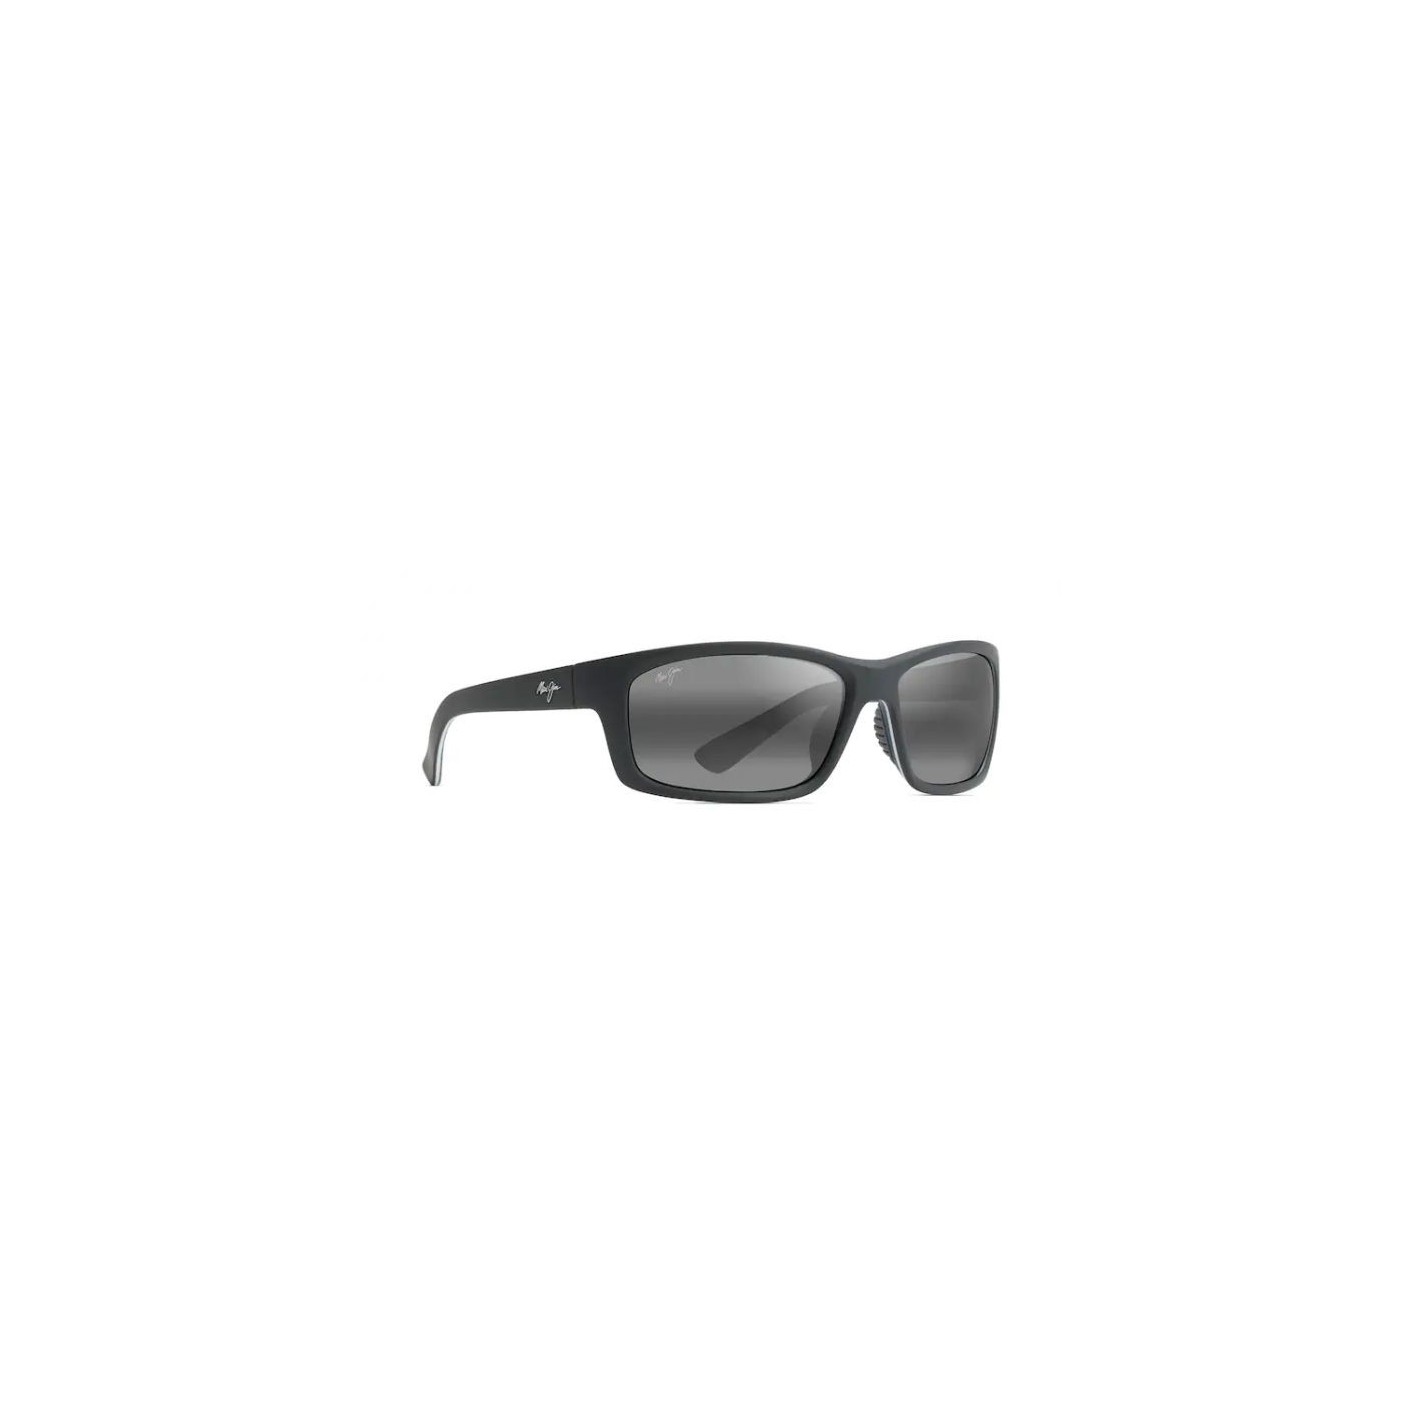 Gafas Sol Hombre Maui Jim 766-02MD rectangular color negro material acetato